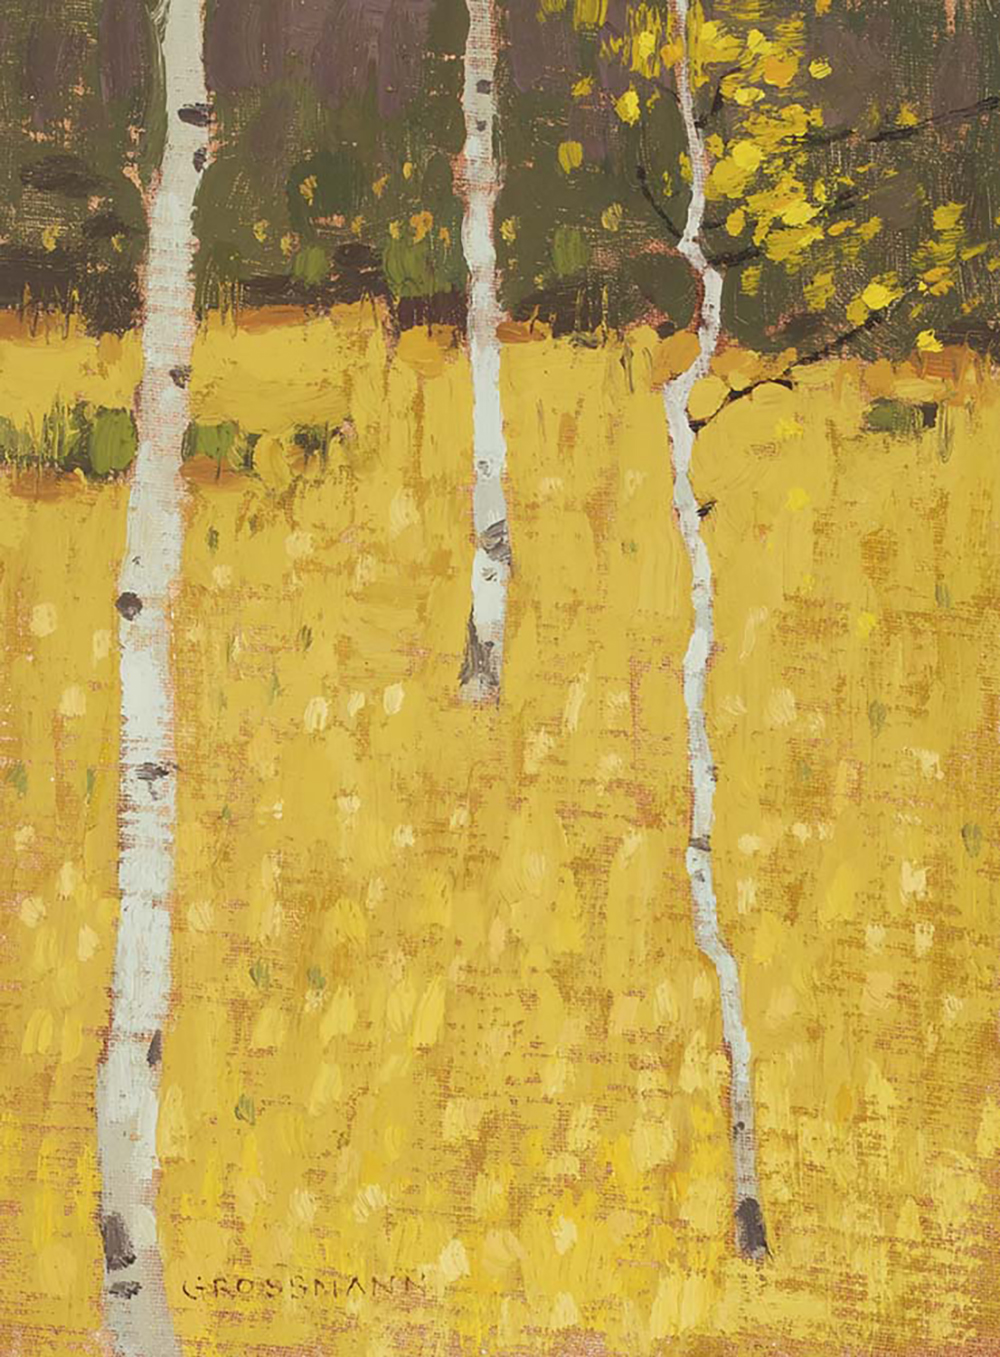 DG16-13 The Scent of Fallen Leaves 8x6 Oil:Linen Panel $750F WEB